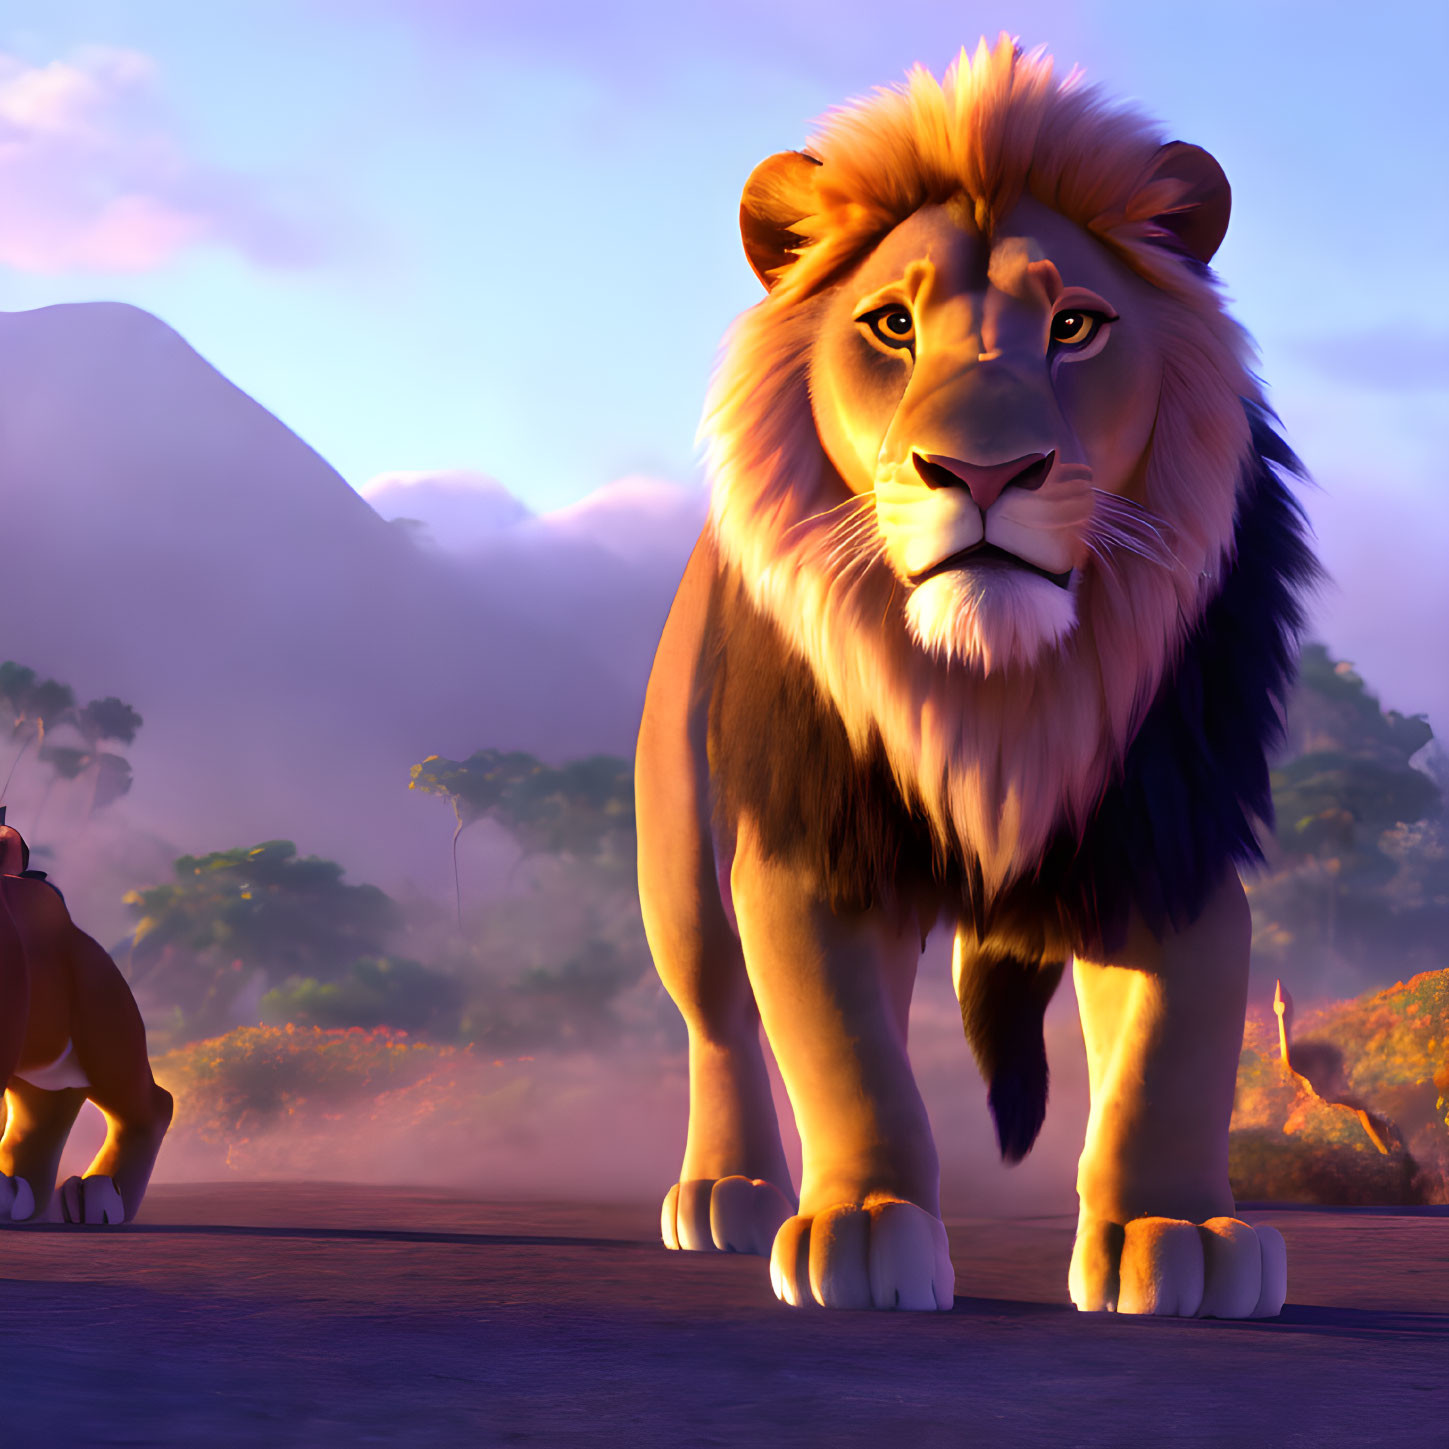 Majestic animated lion in savanna at sunrise or sunset